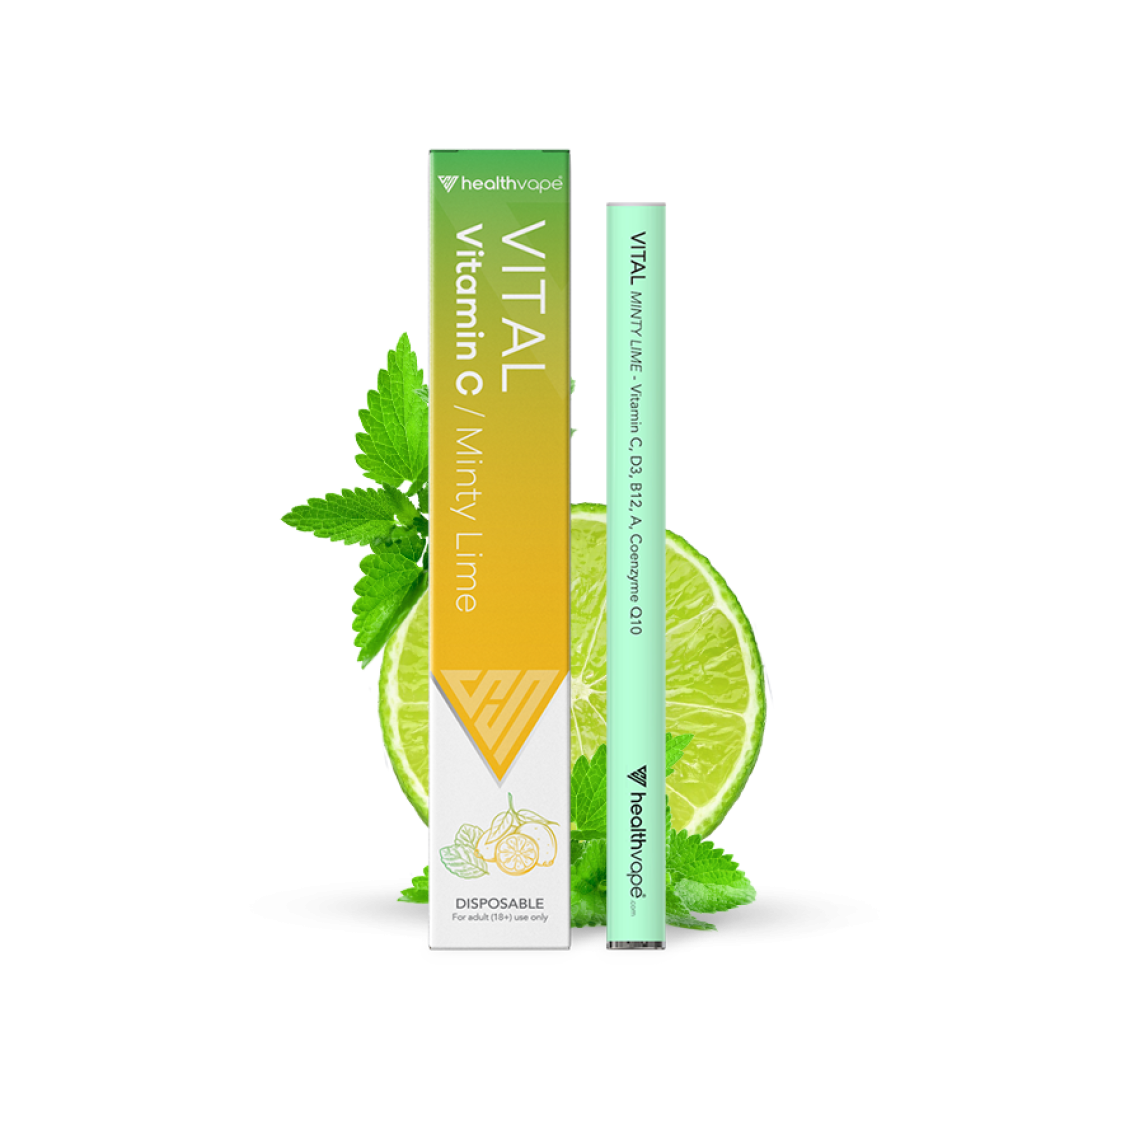 VITAL - Vitamin C / Minty Lime